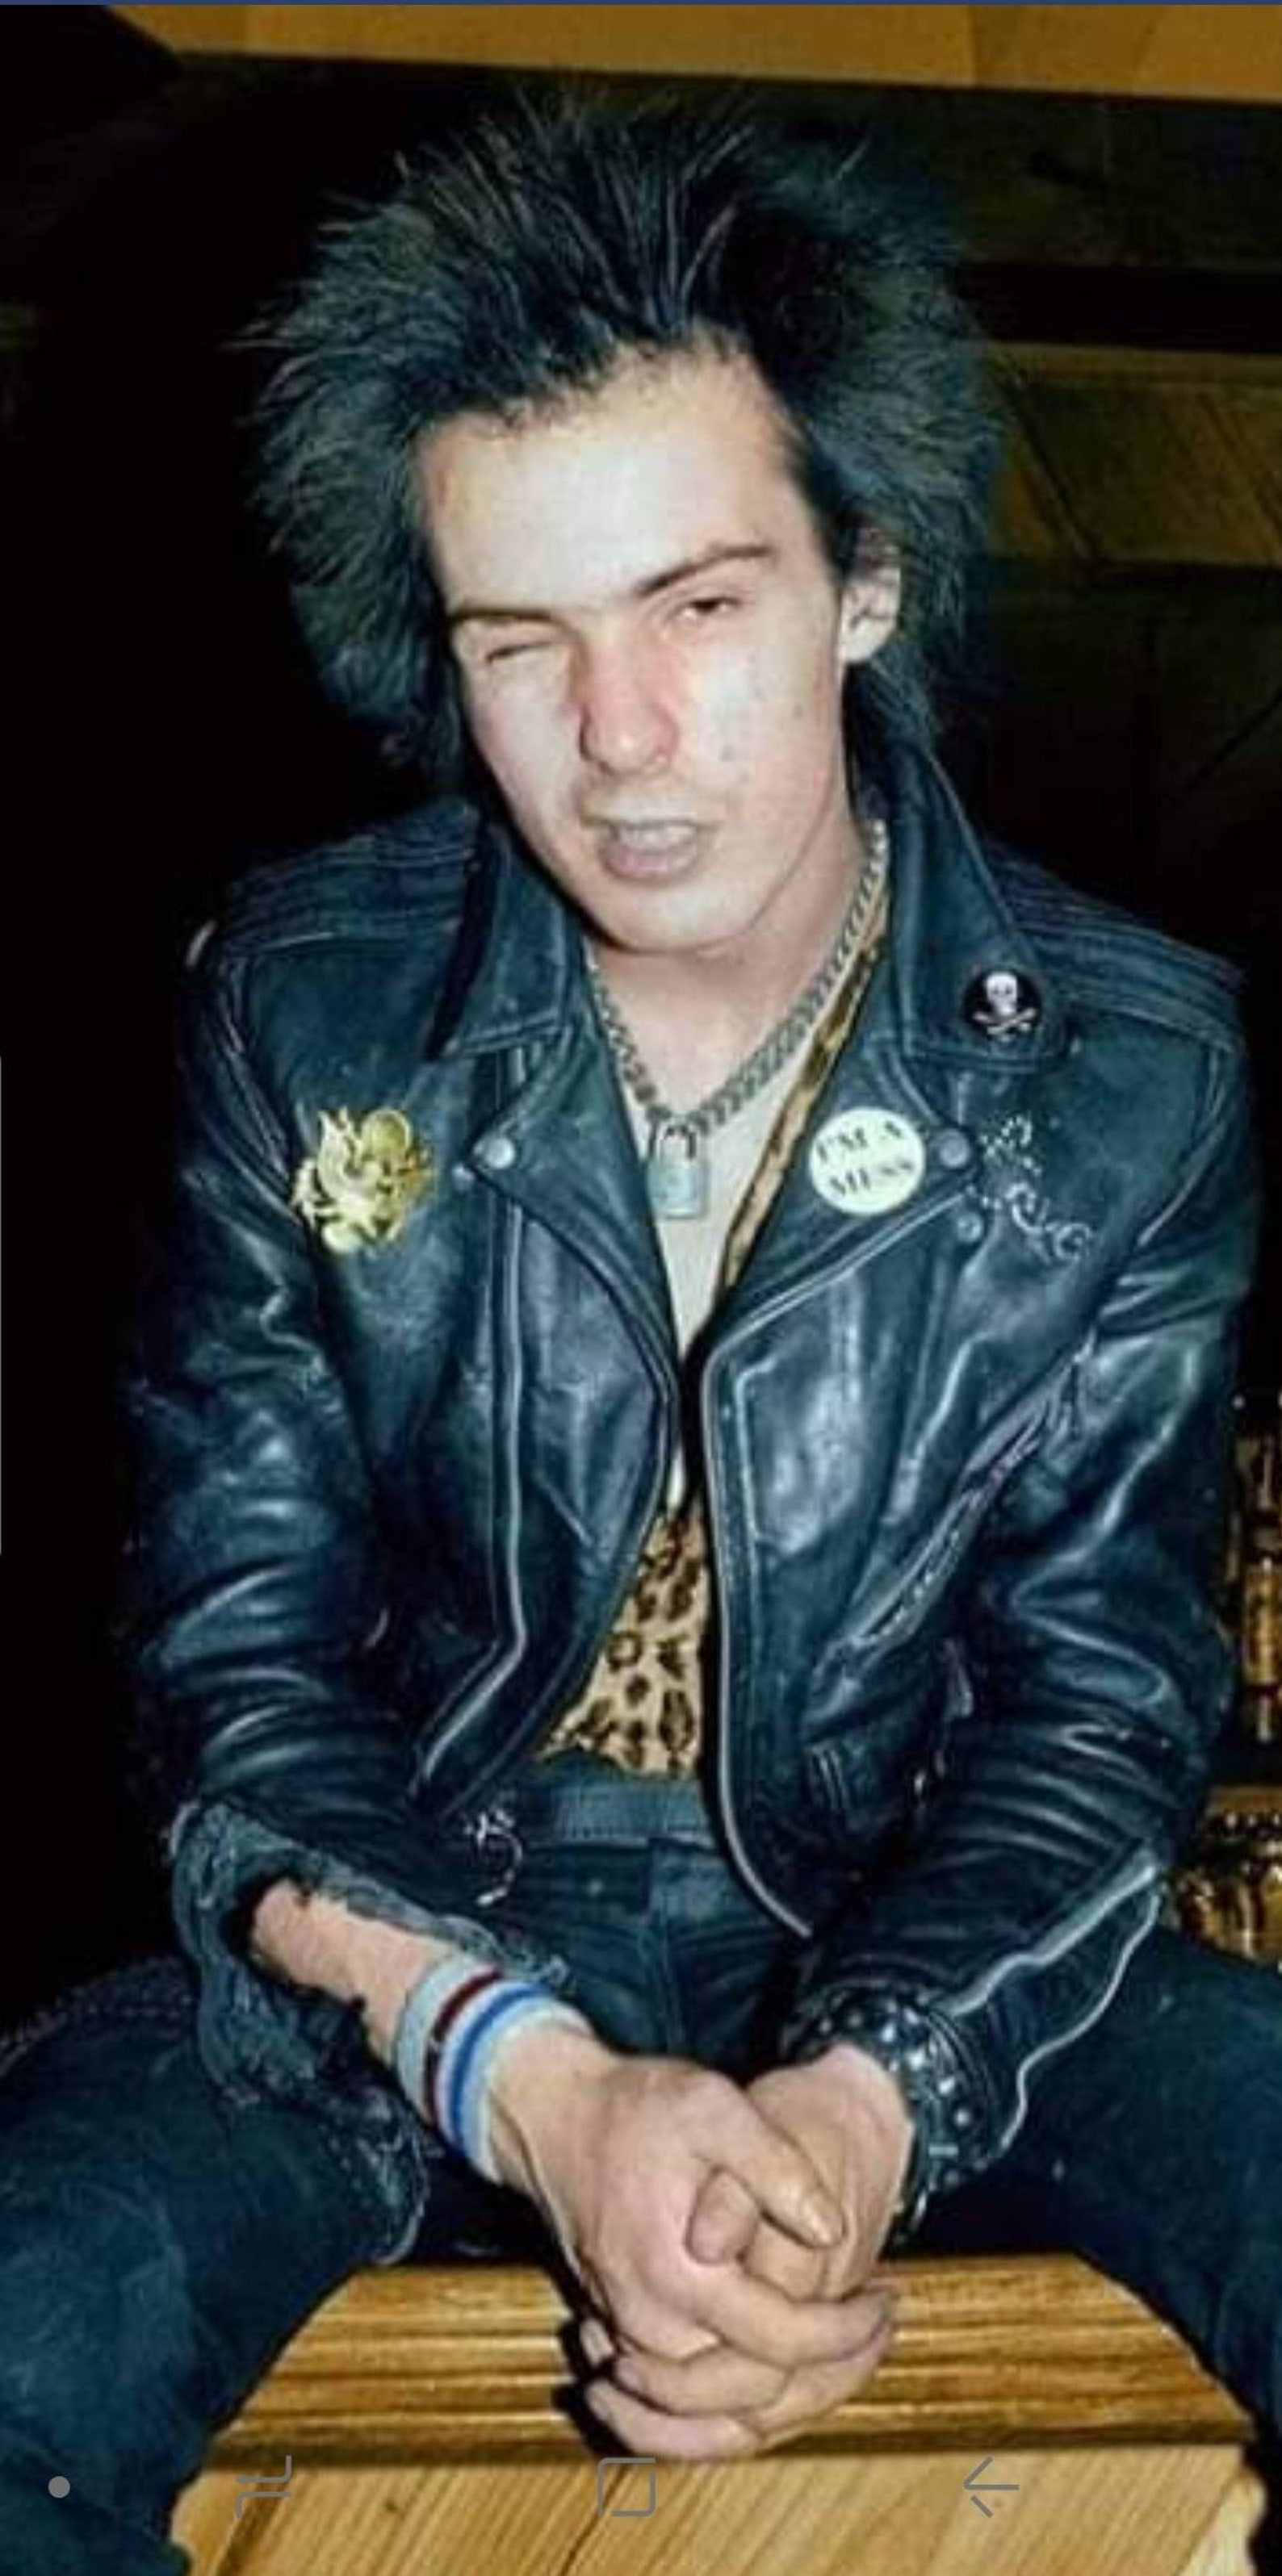 Sex Pistols Bassist Sid Vicious Sweat Band/ Wristband Replica - Etsy